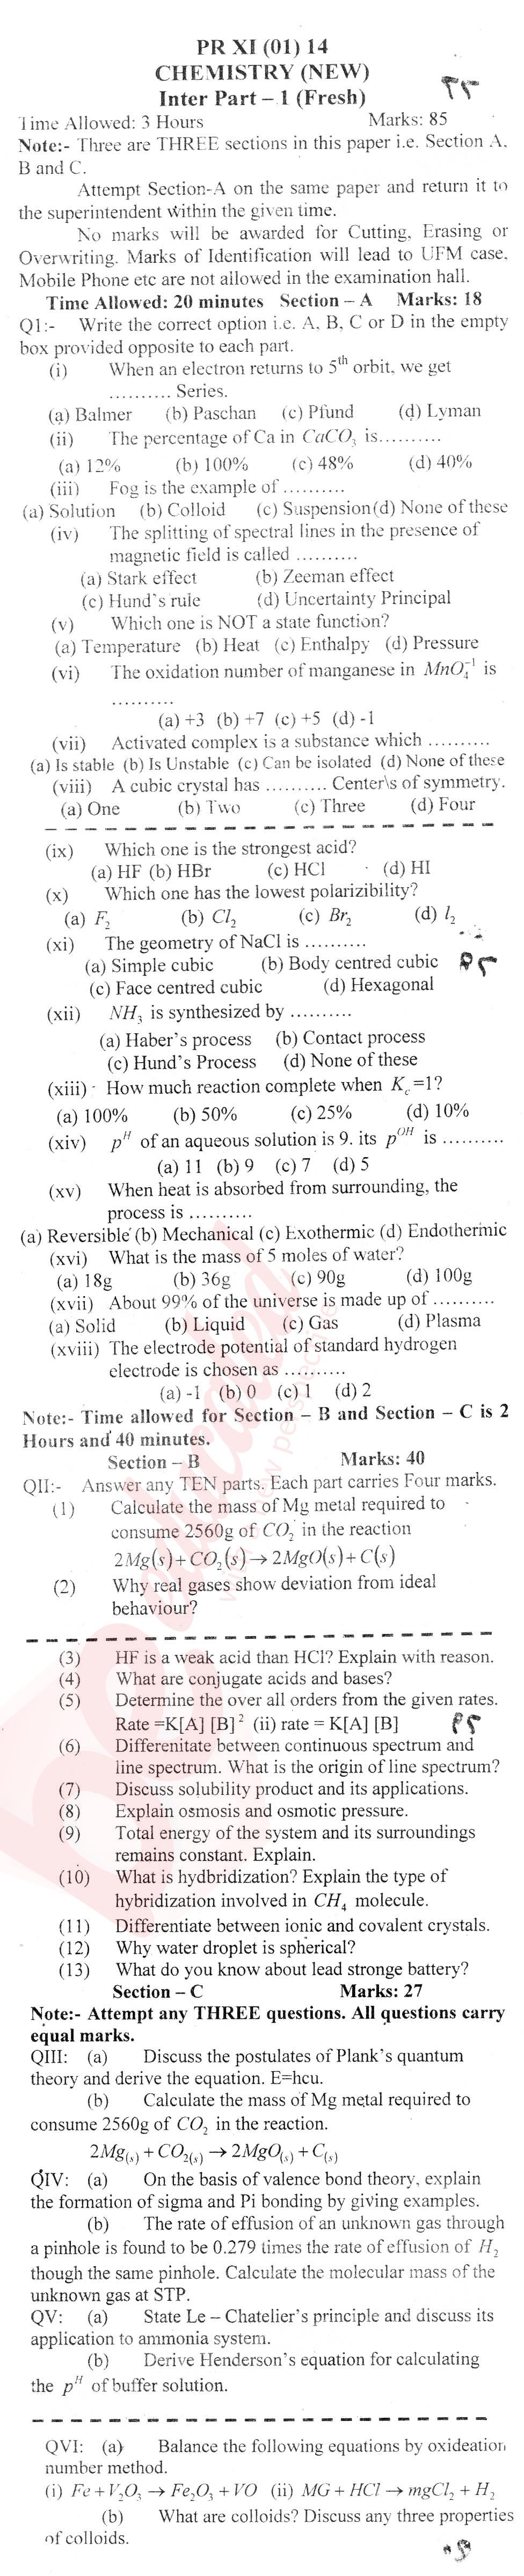 Chemistry FSC Part 1 Past Paper Group 1 BISE Bannu 2014